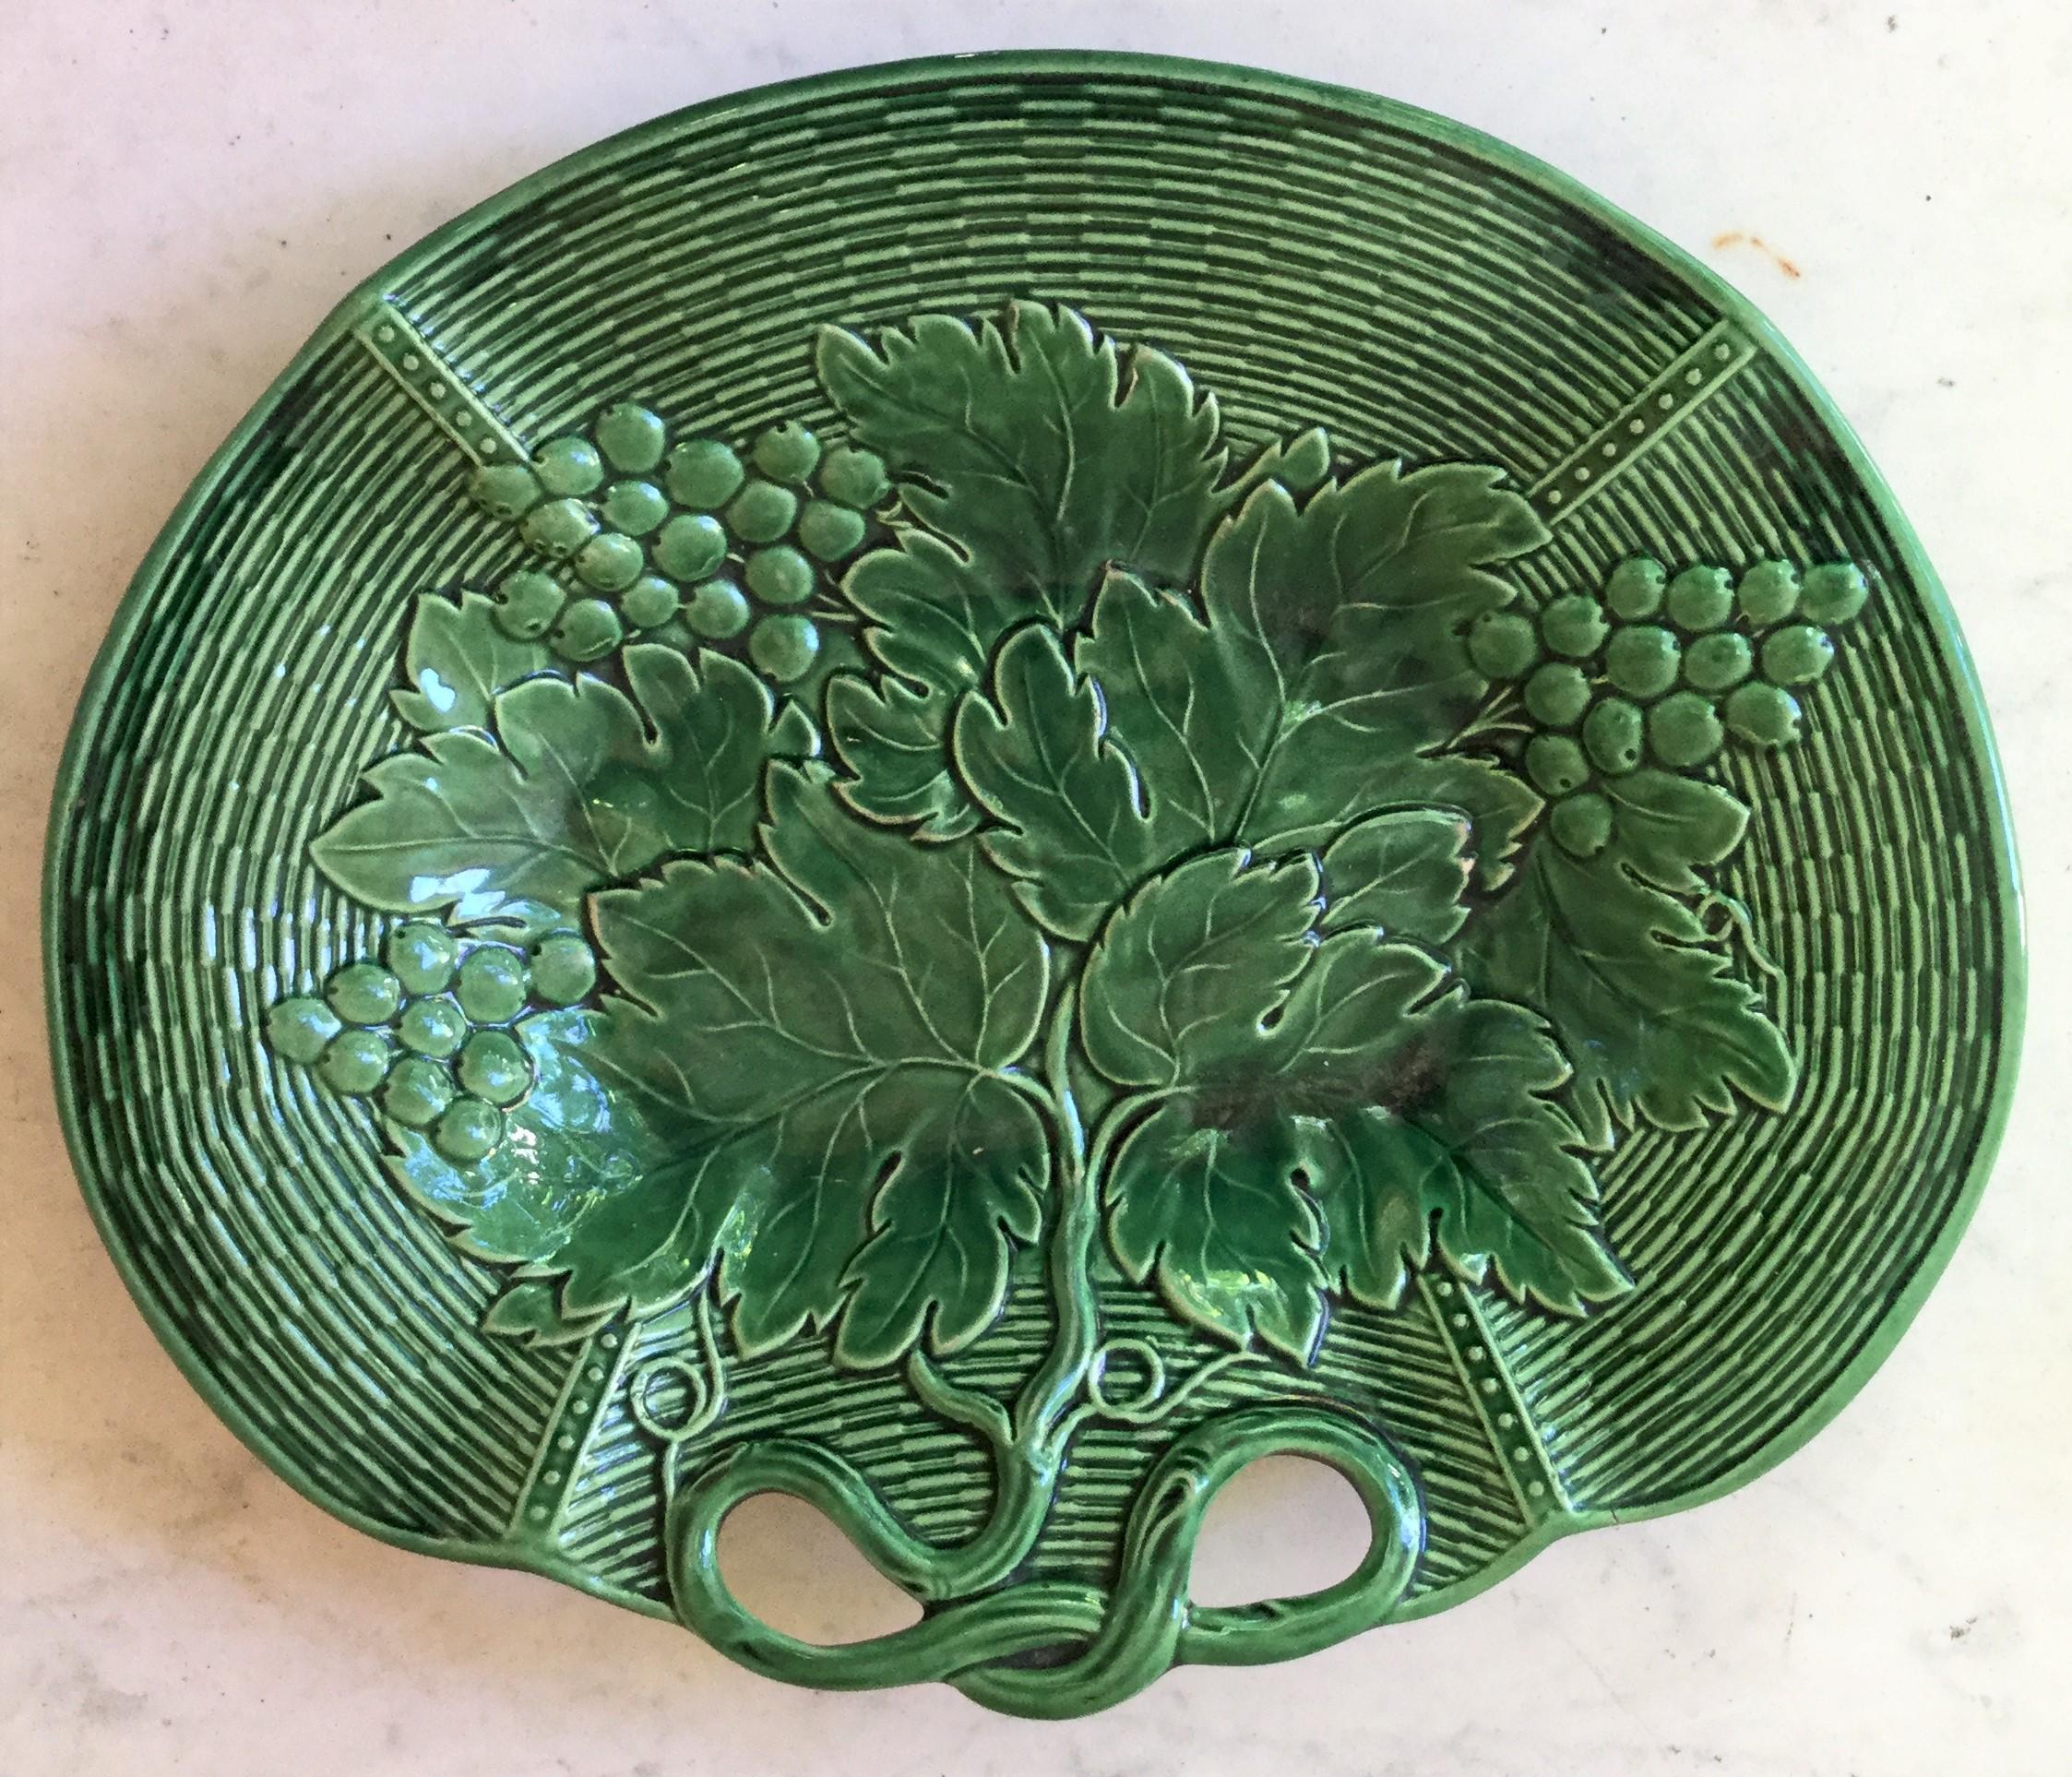 English green Majolica grapes handled platter signed Davenport, circa 1800.
Dated 1793-1810.